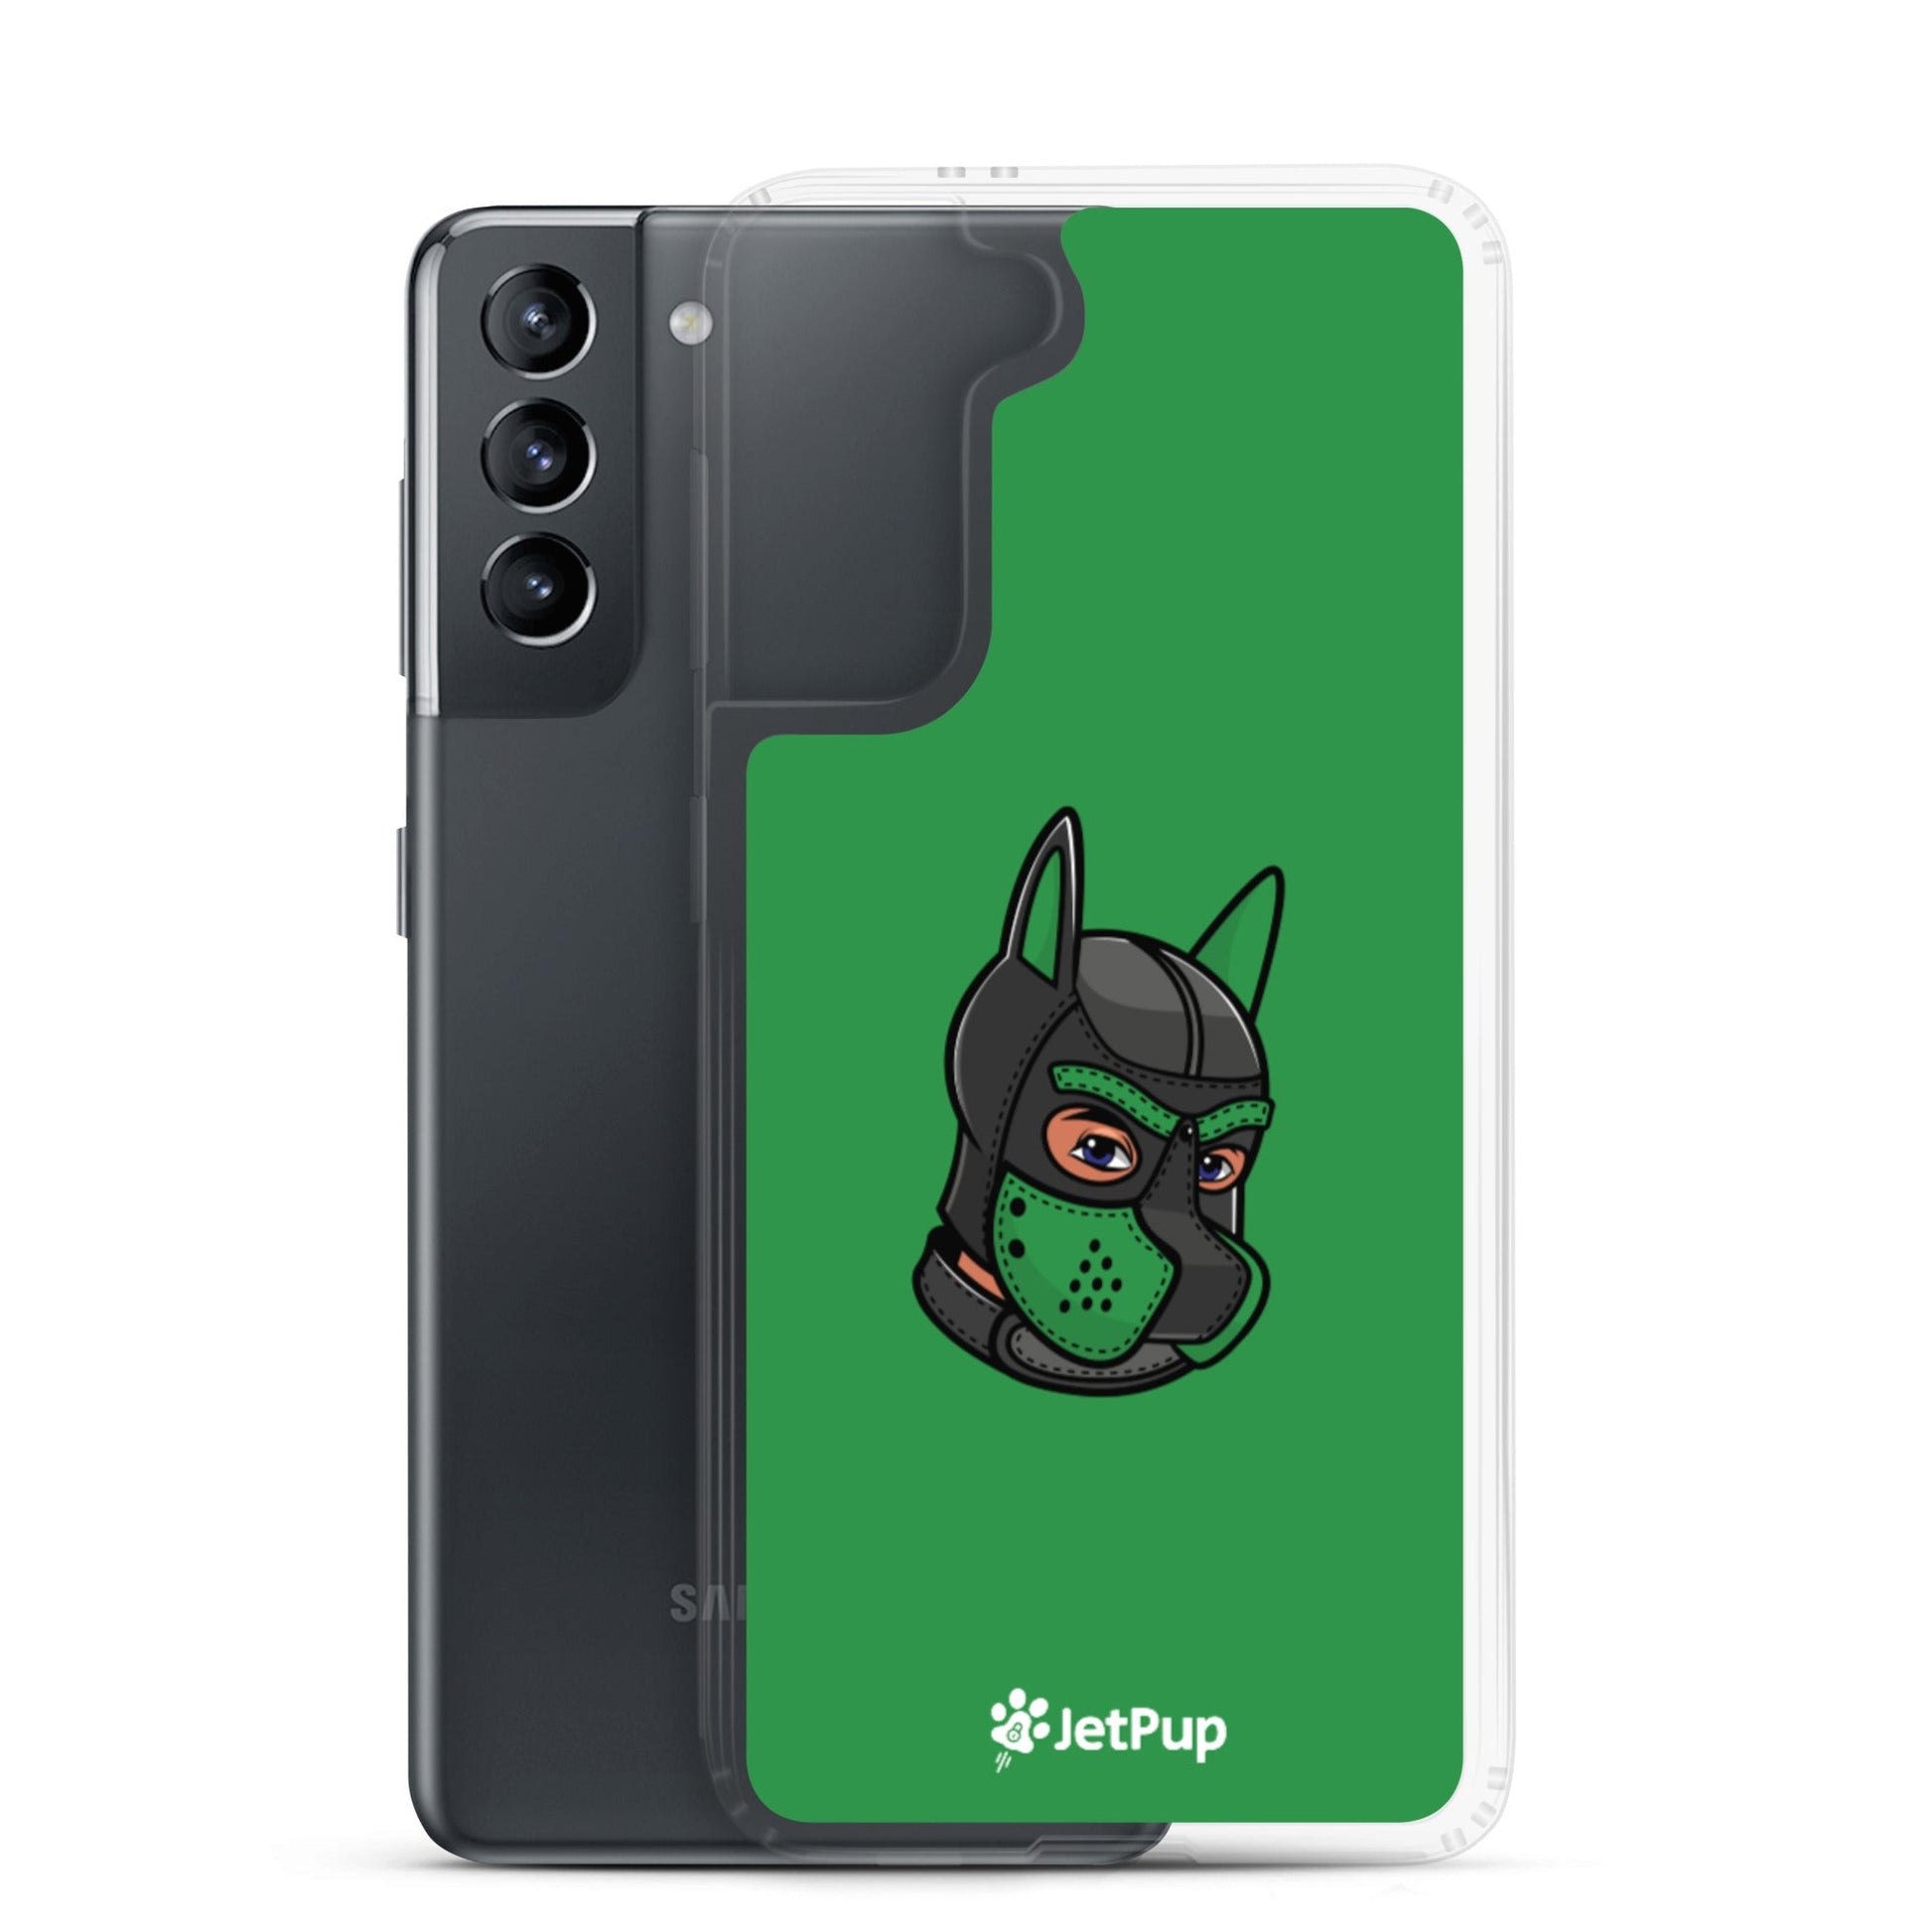 Pup Hood Samsung Case - Green - JetPup